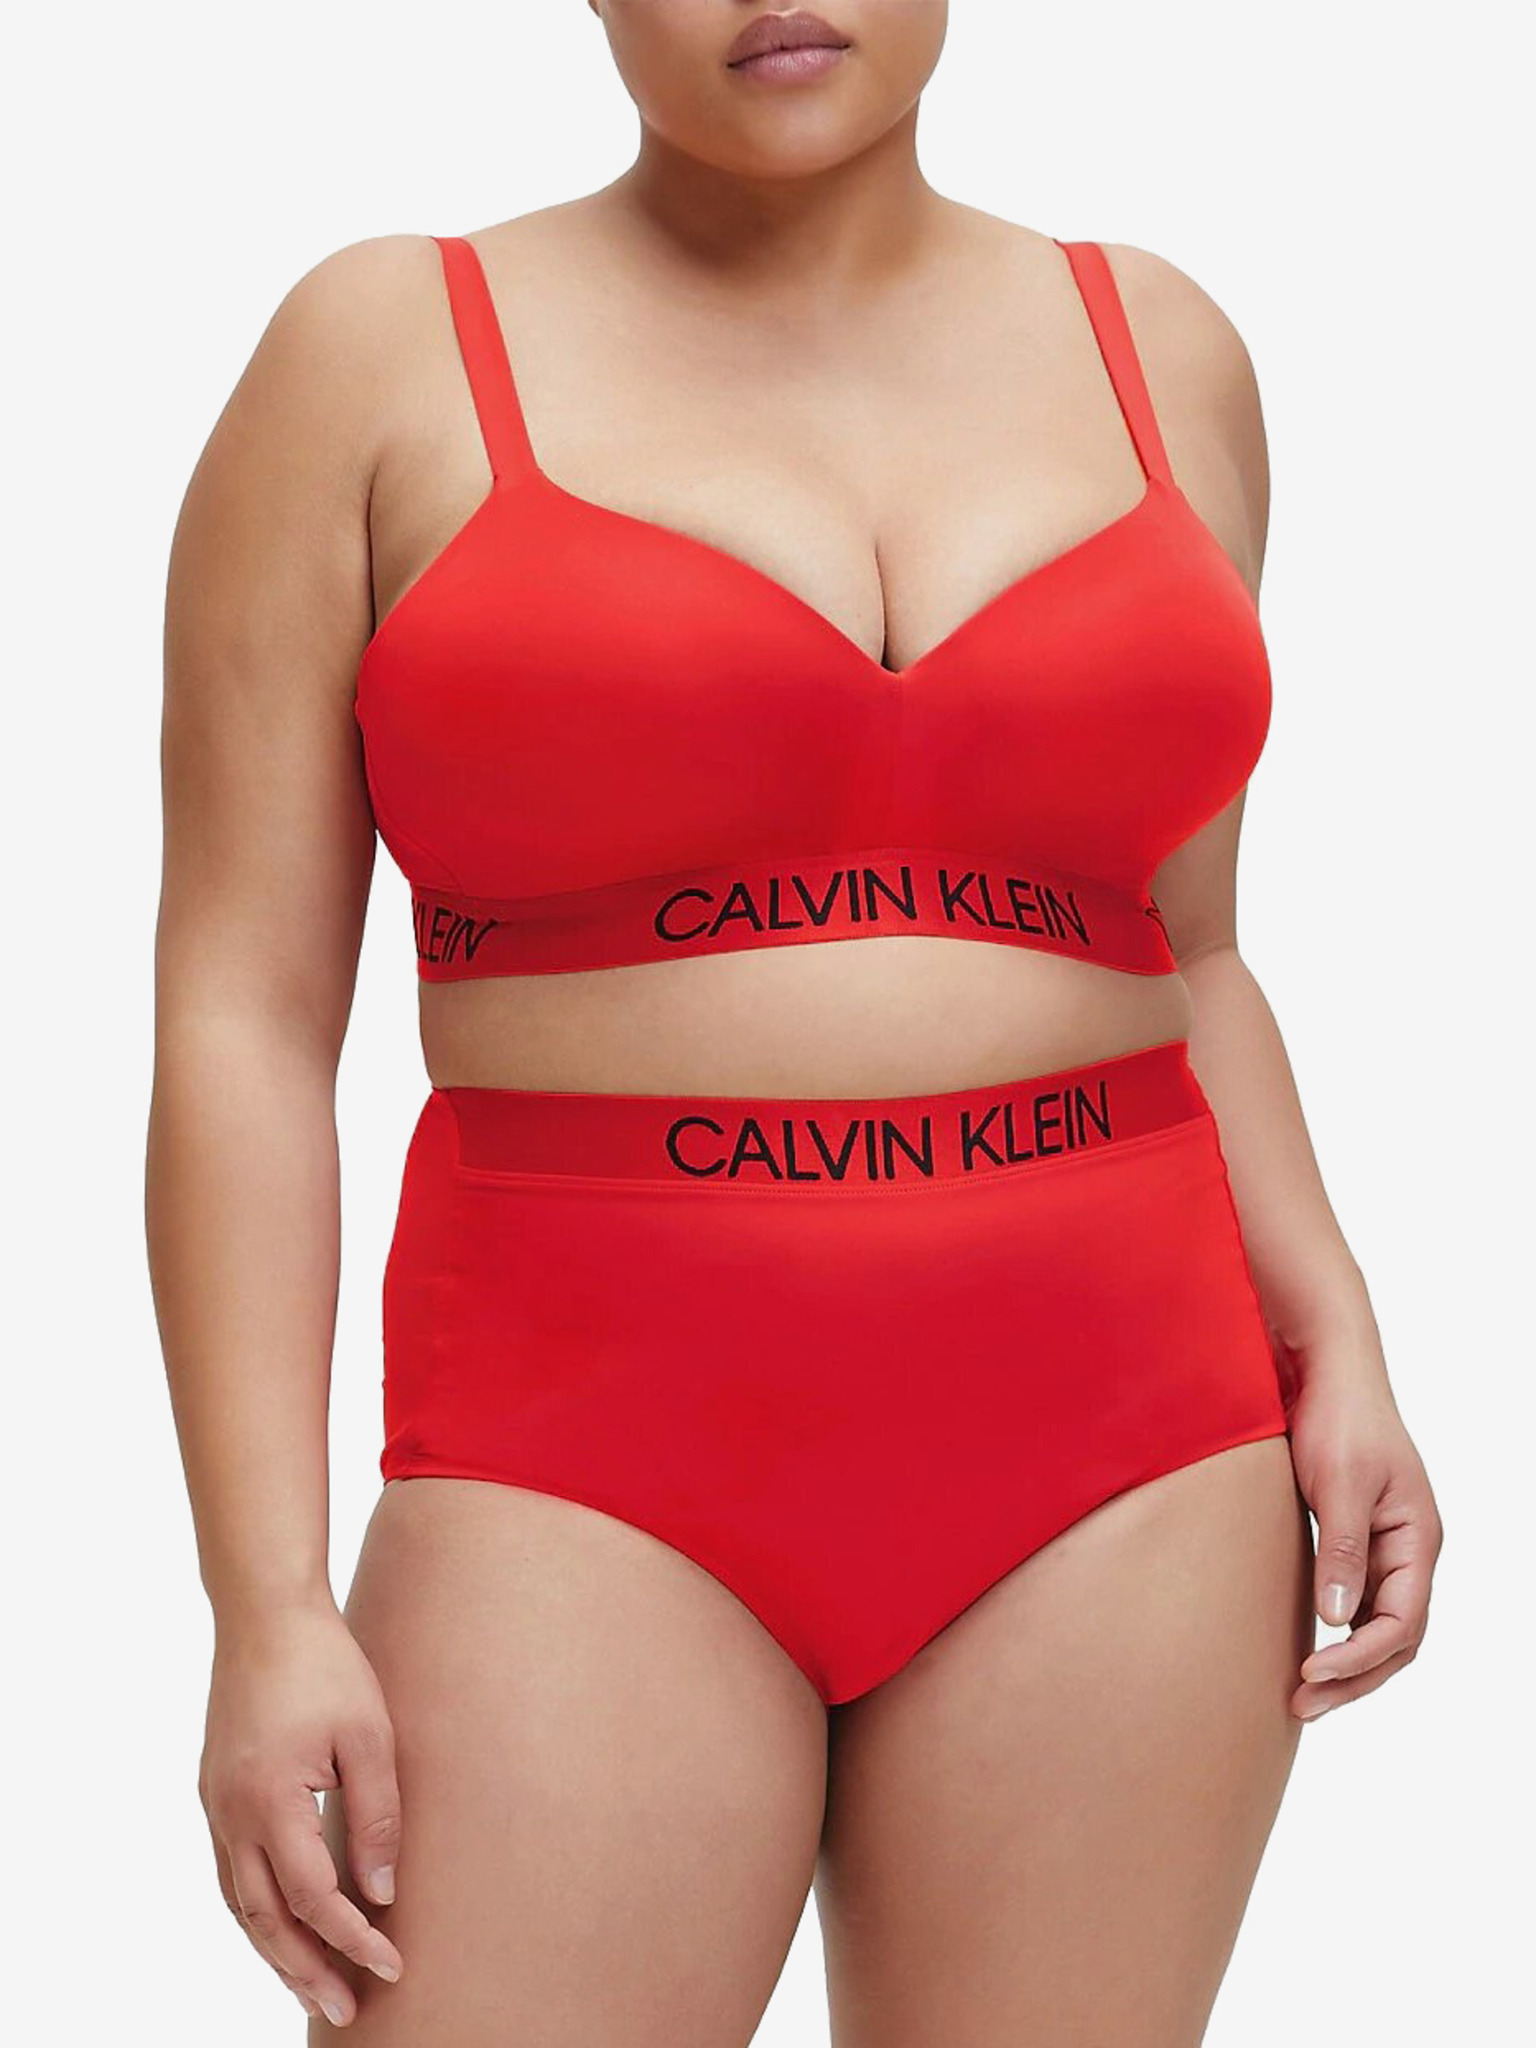 Calvin Klein Underwear - Demi Bralette Plus Size High Risk Bikini top